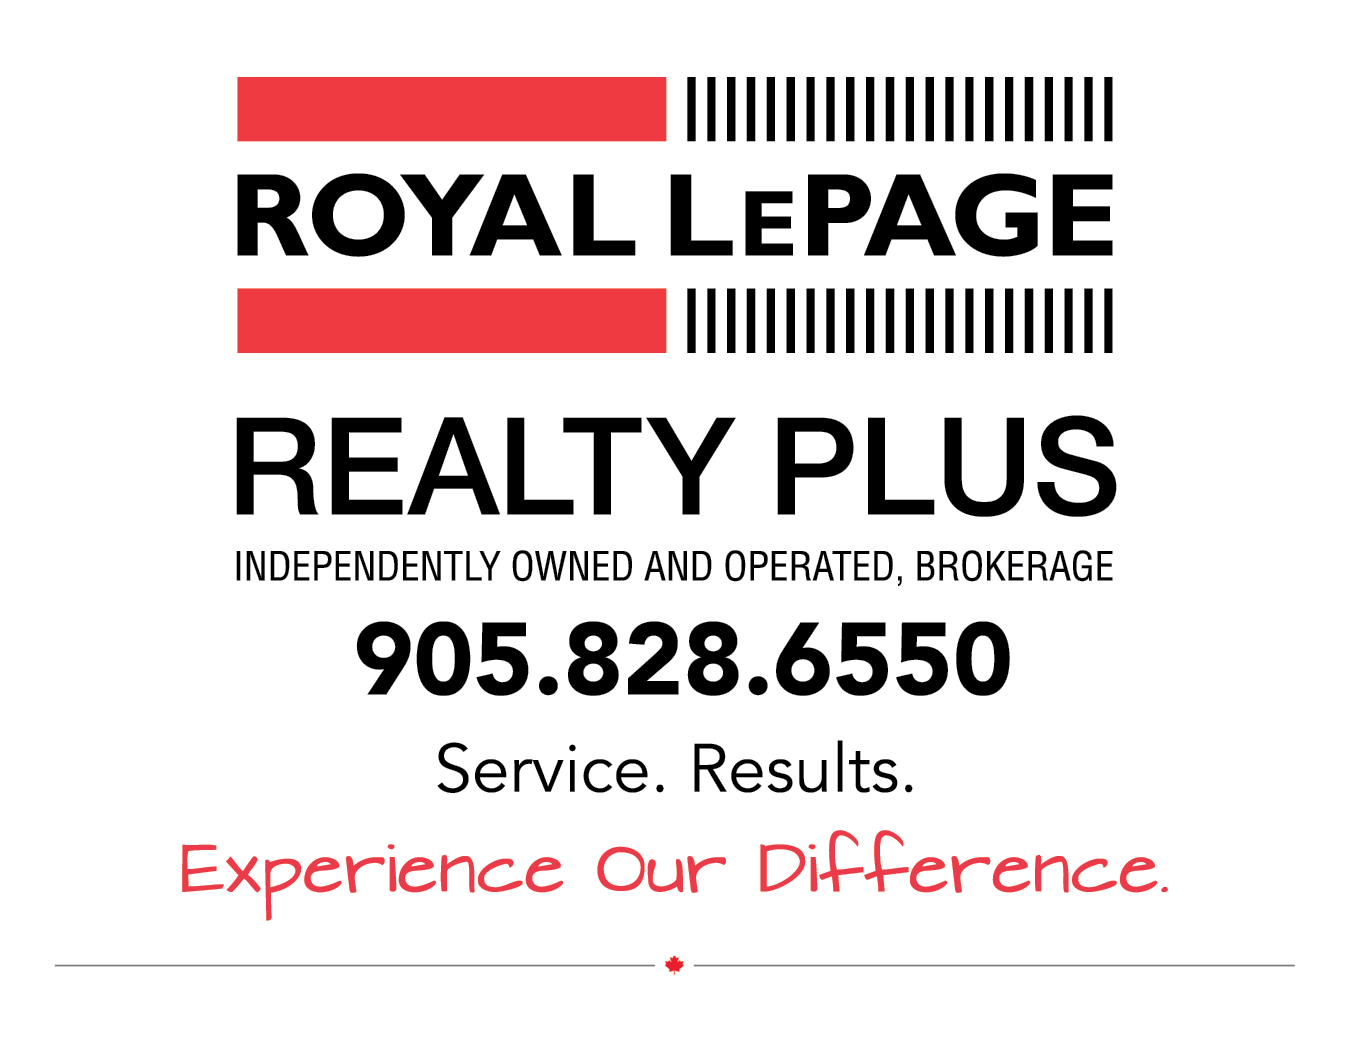 Royal LePage Realty Plus